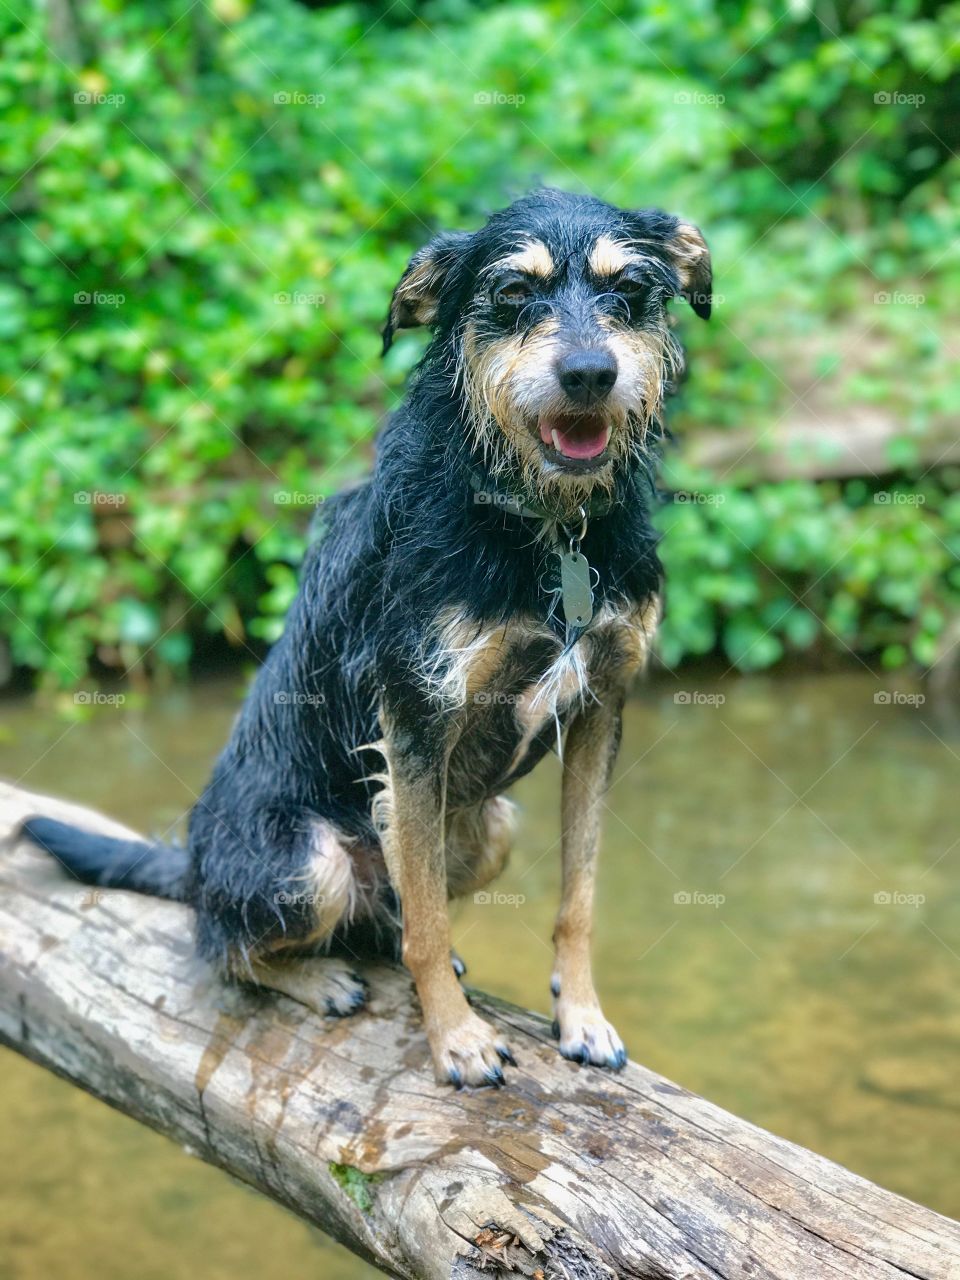 Swimming hole - Dog on a log 